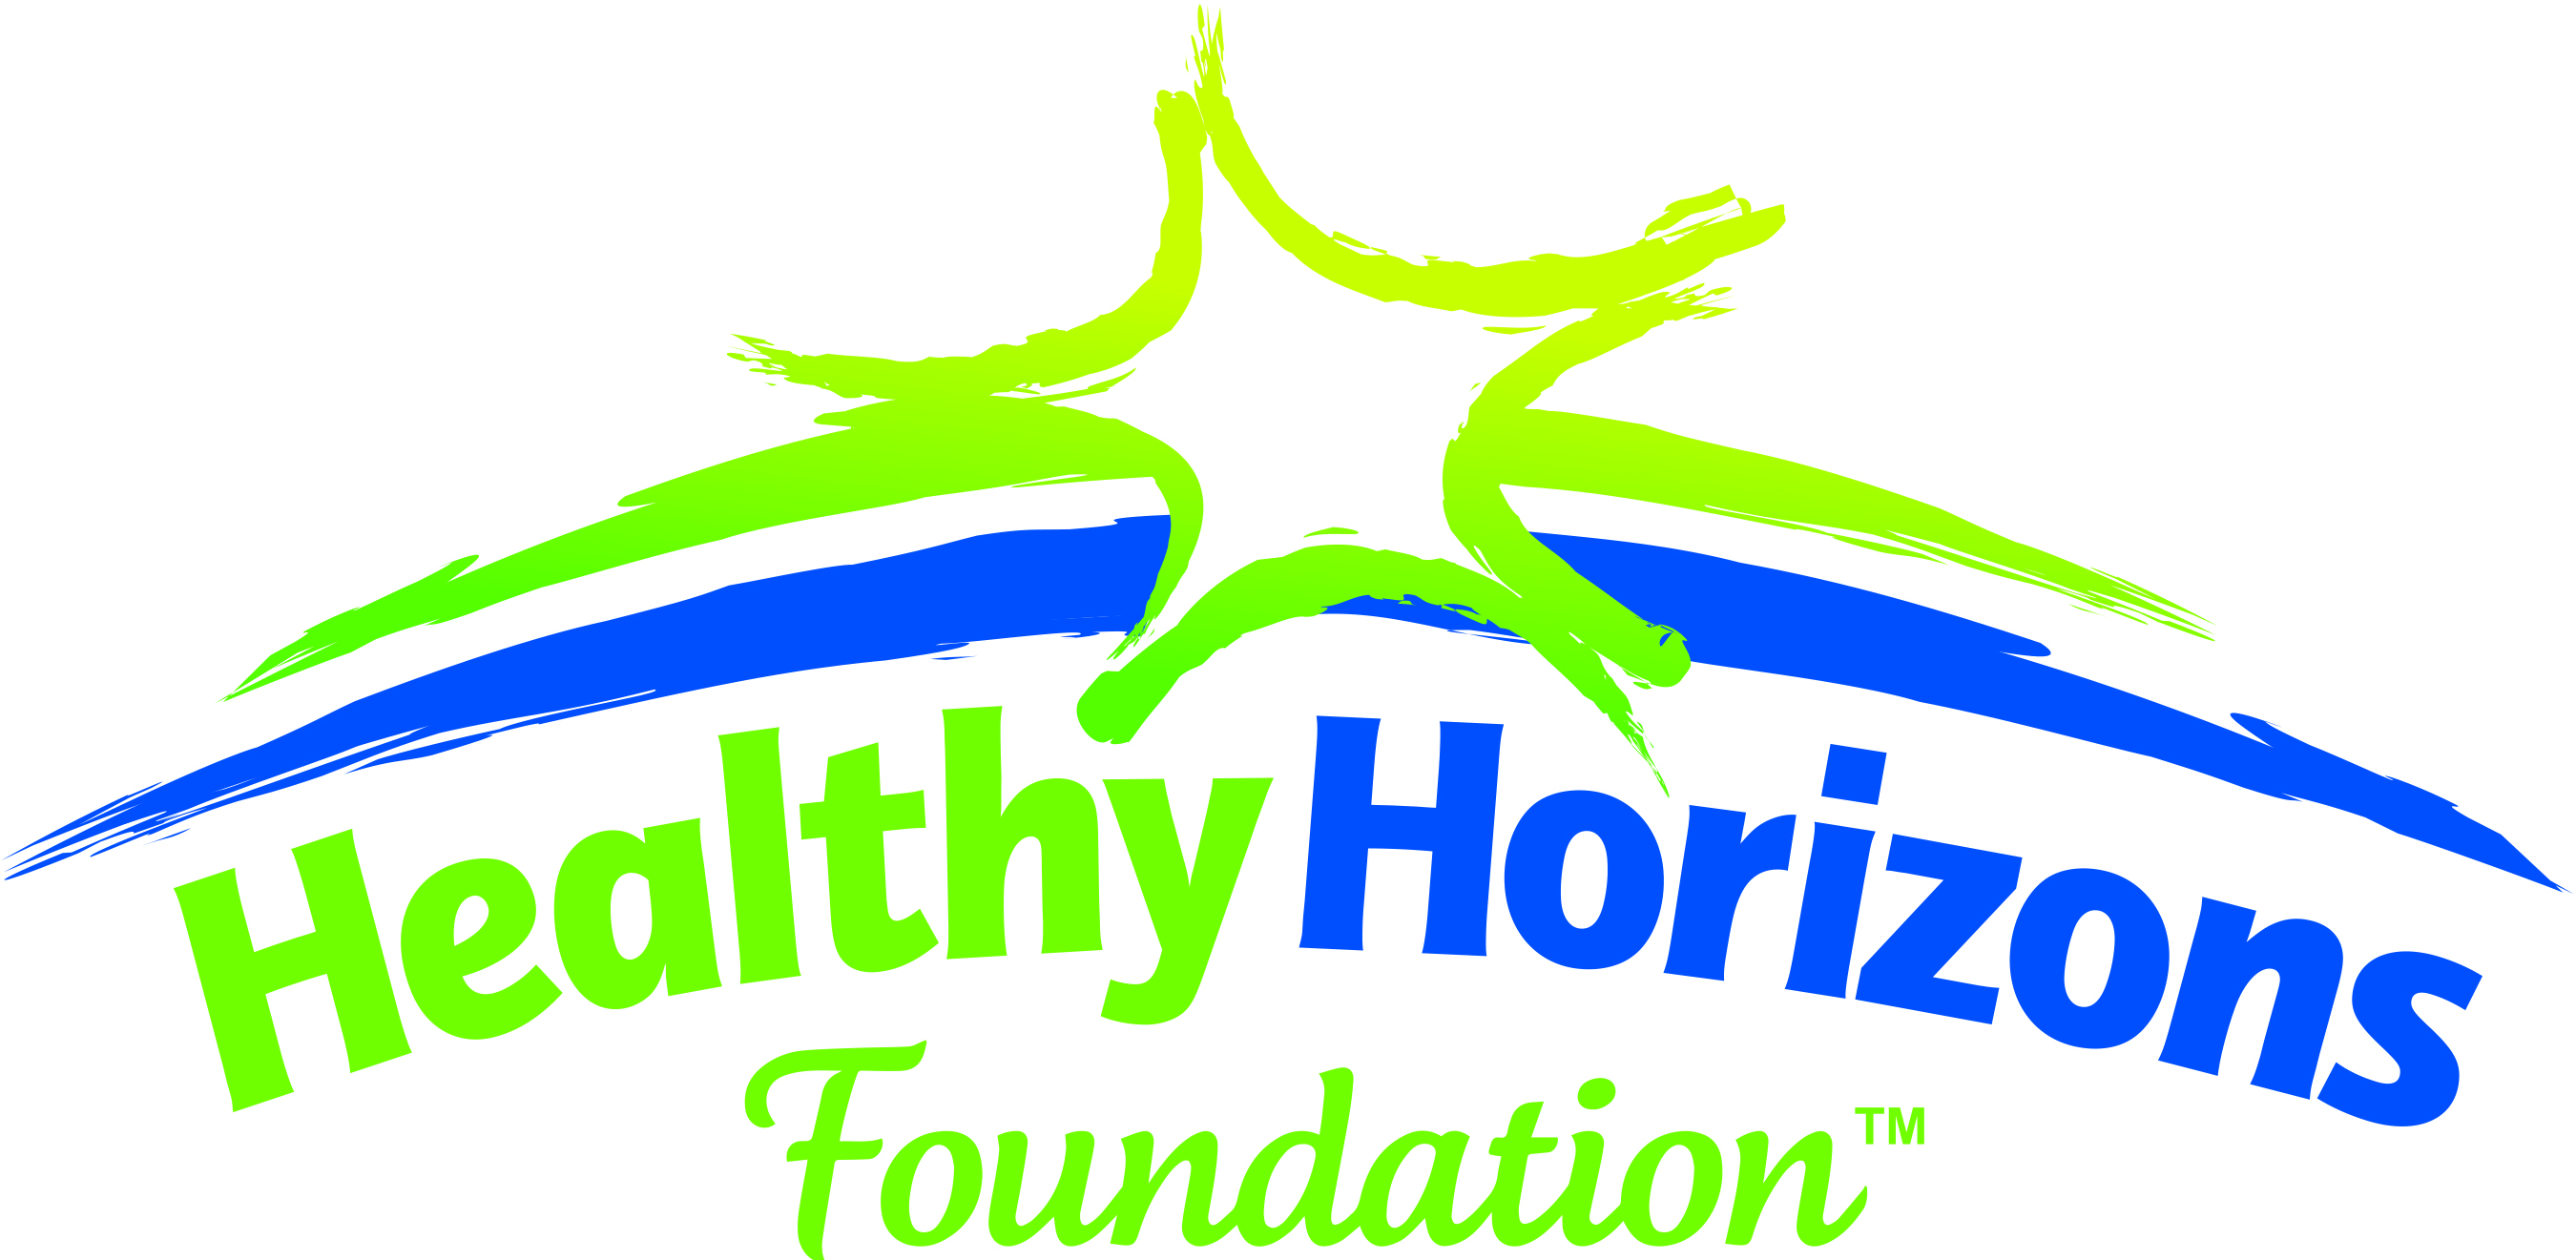 Healthy Horizons Foundation Logo - Copy.jpg (1.56 MB)